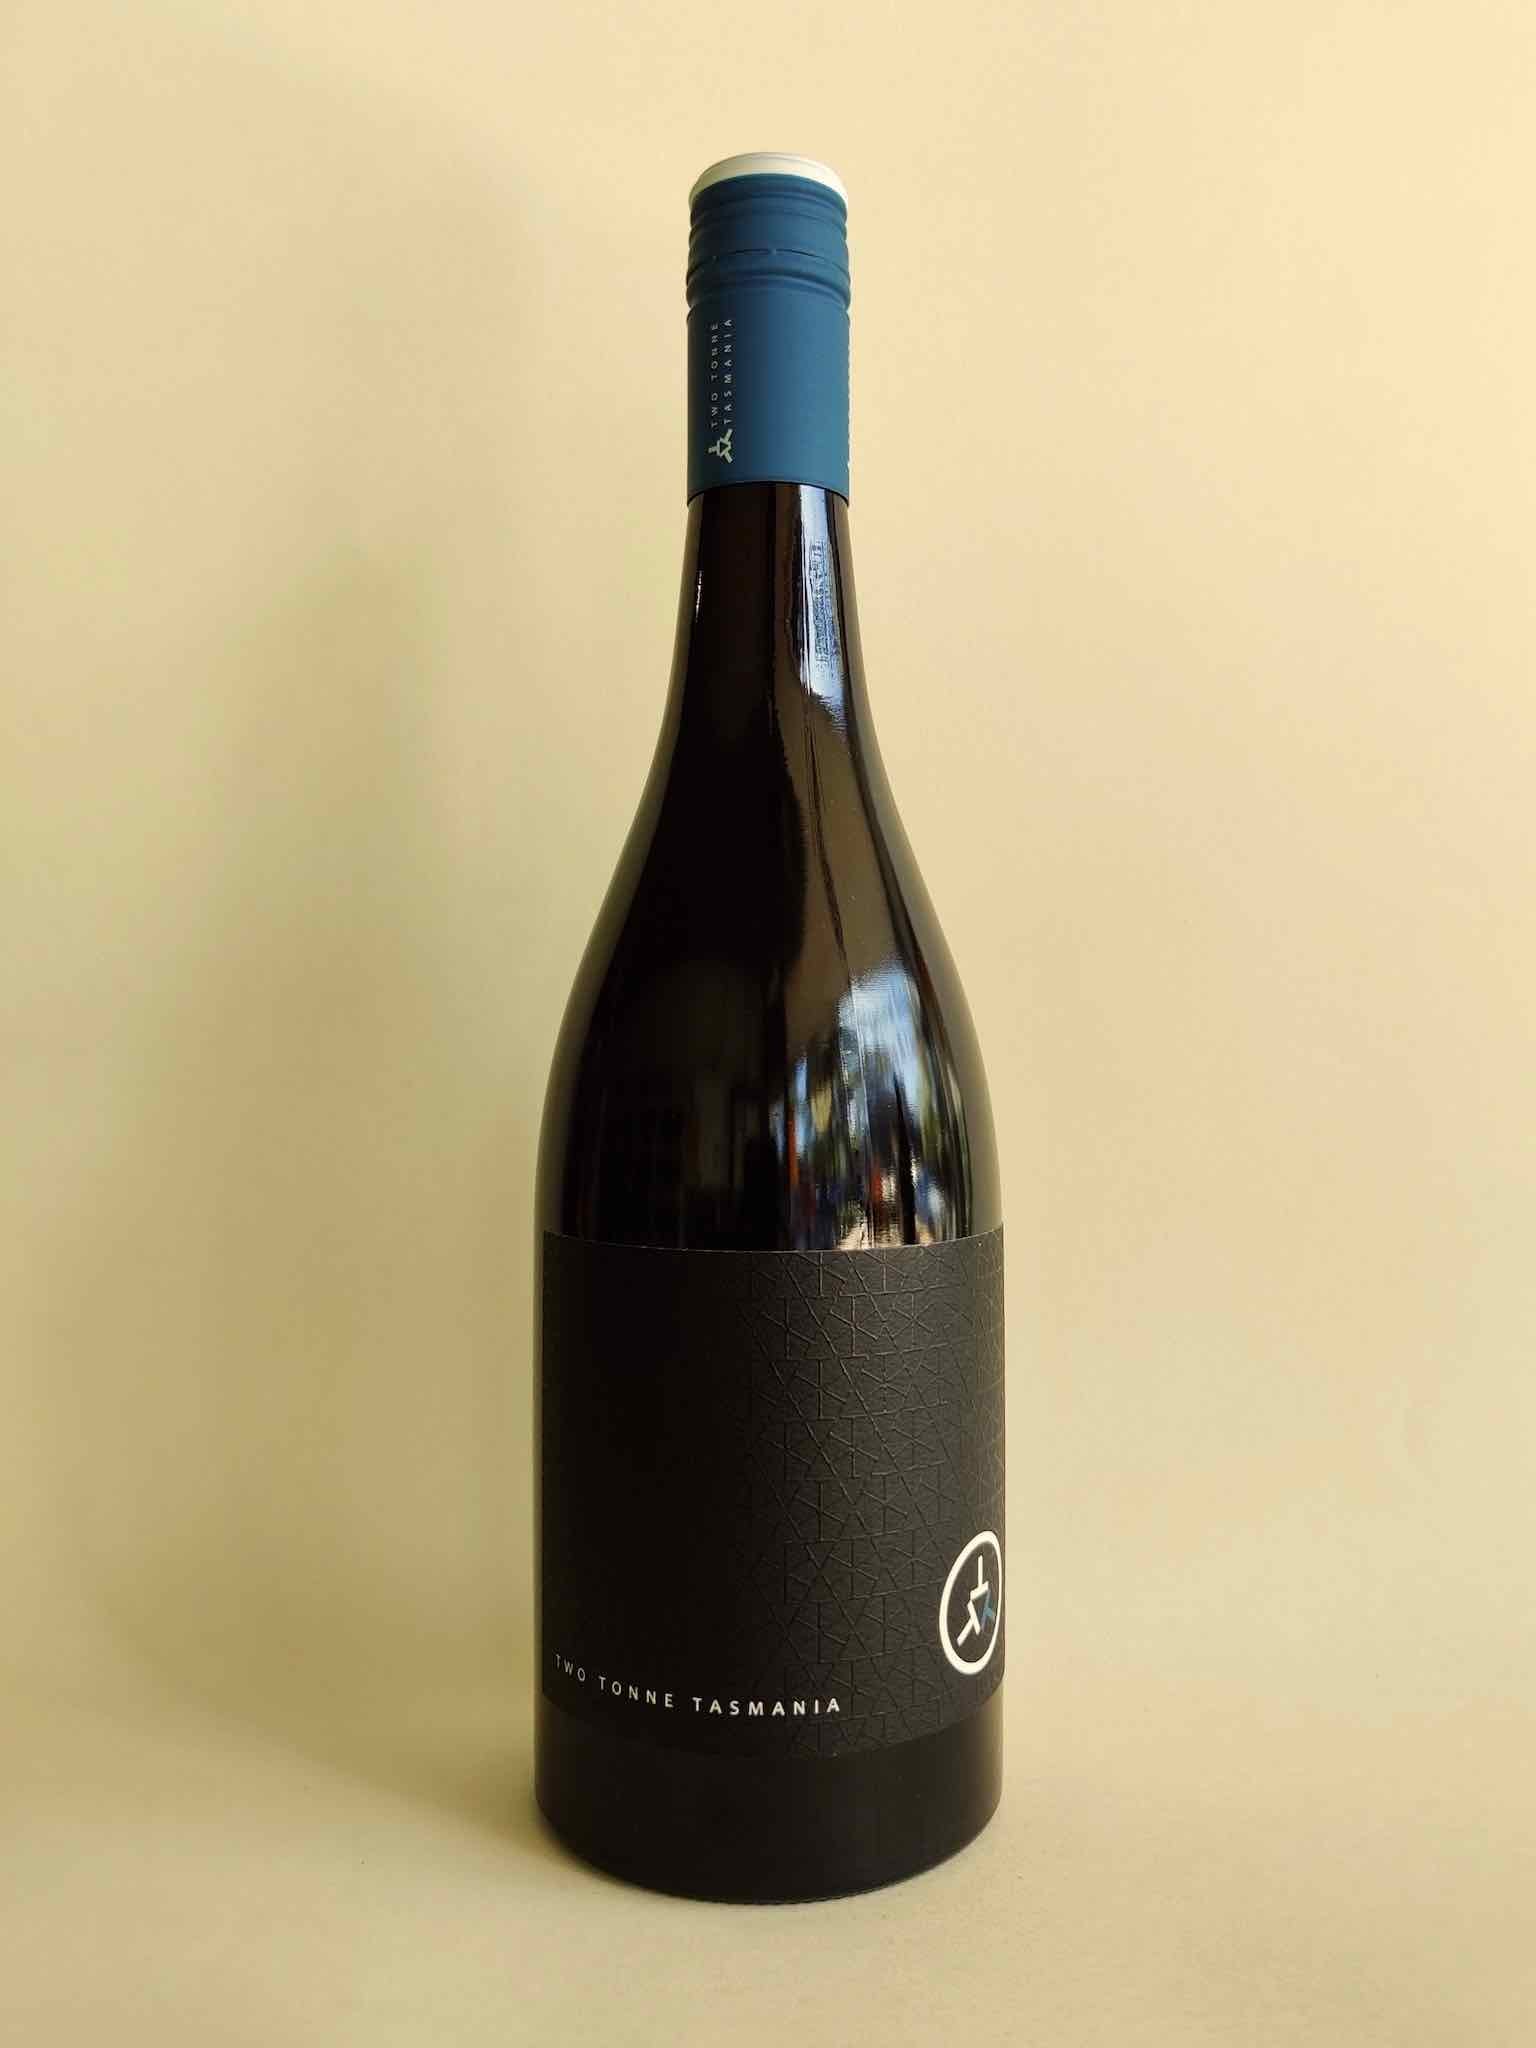 A bottle of Two Tonne Tasmania TMV Pinot Noir from Tamar Valley, Tasmania.